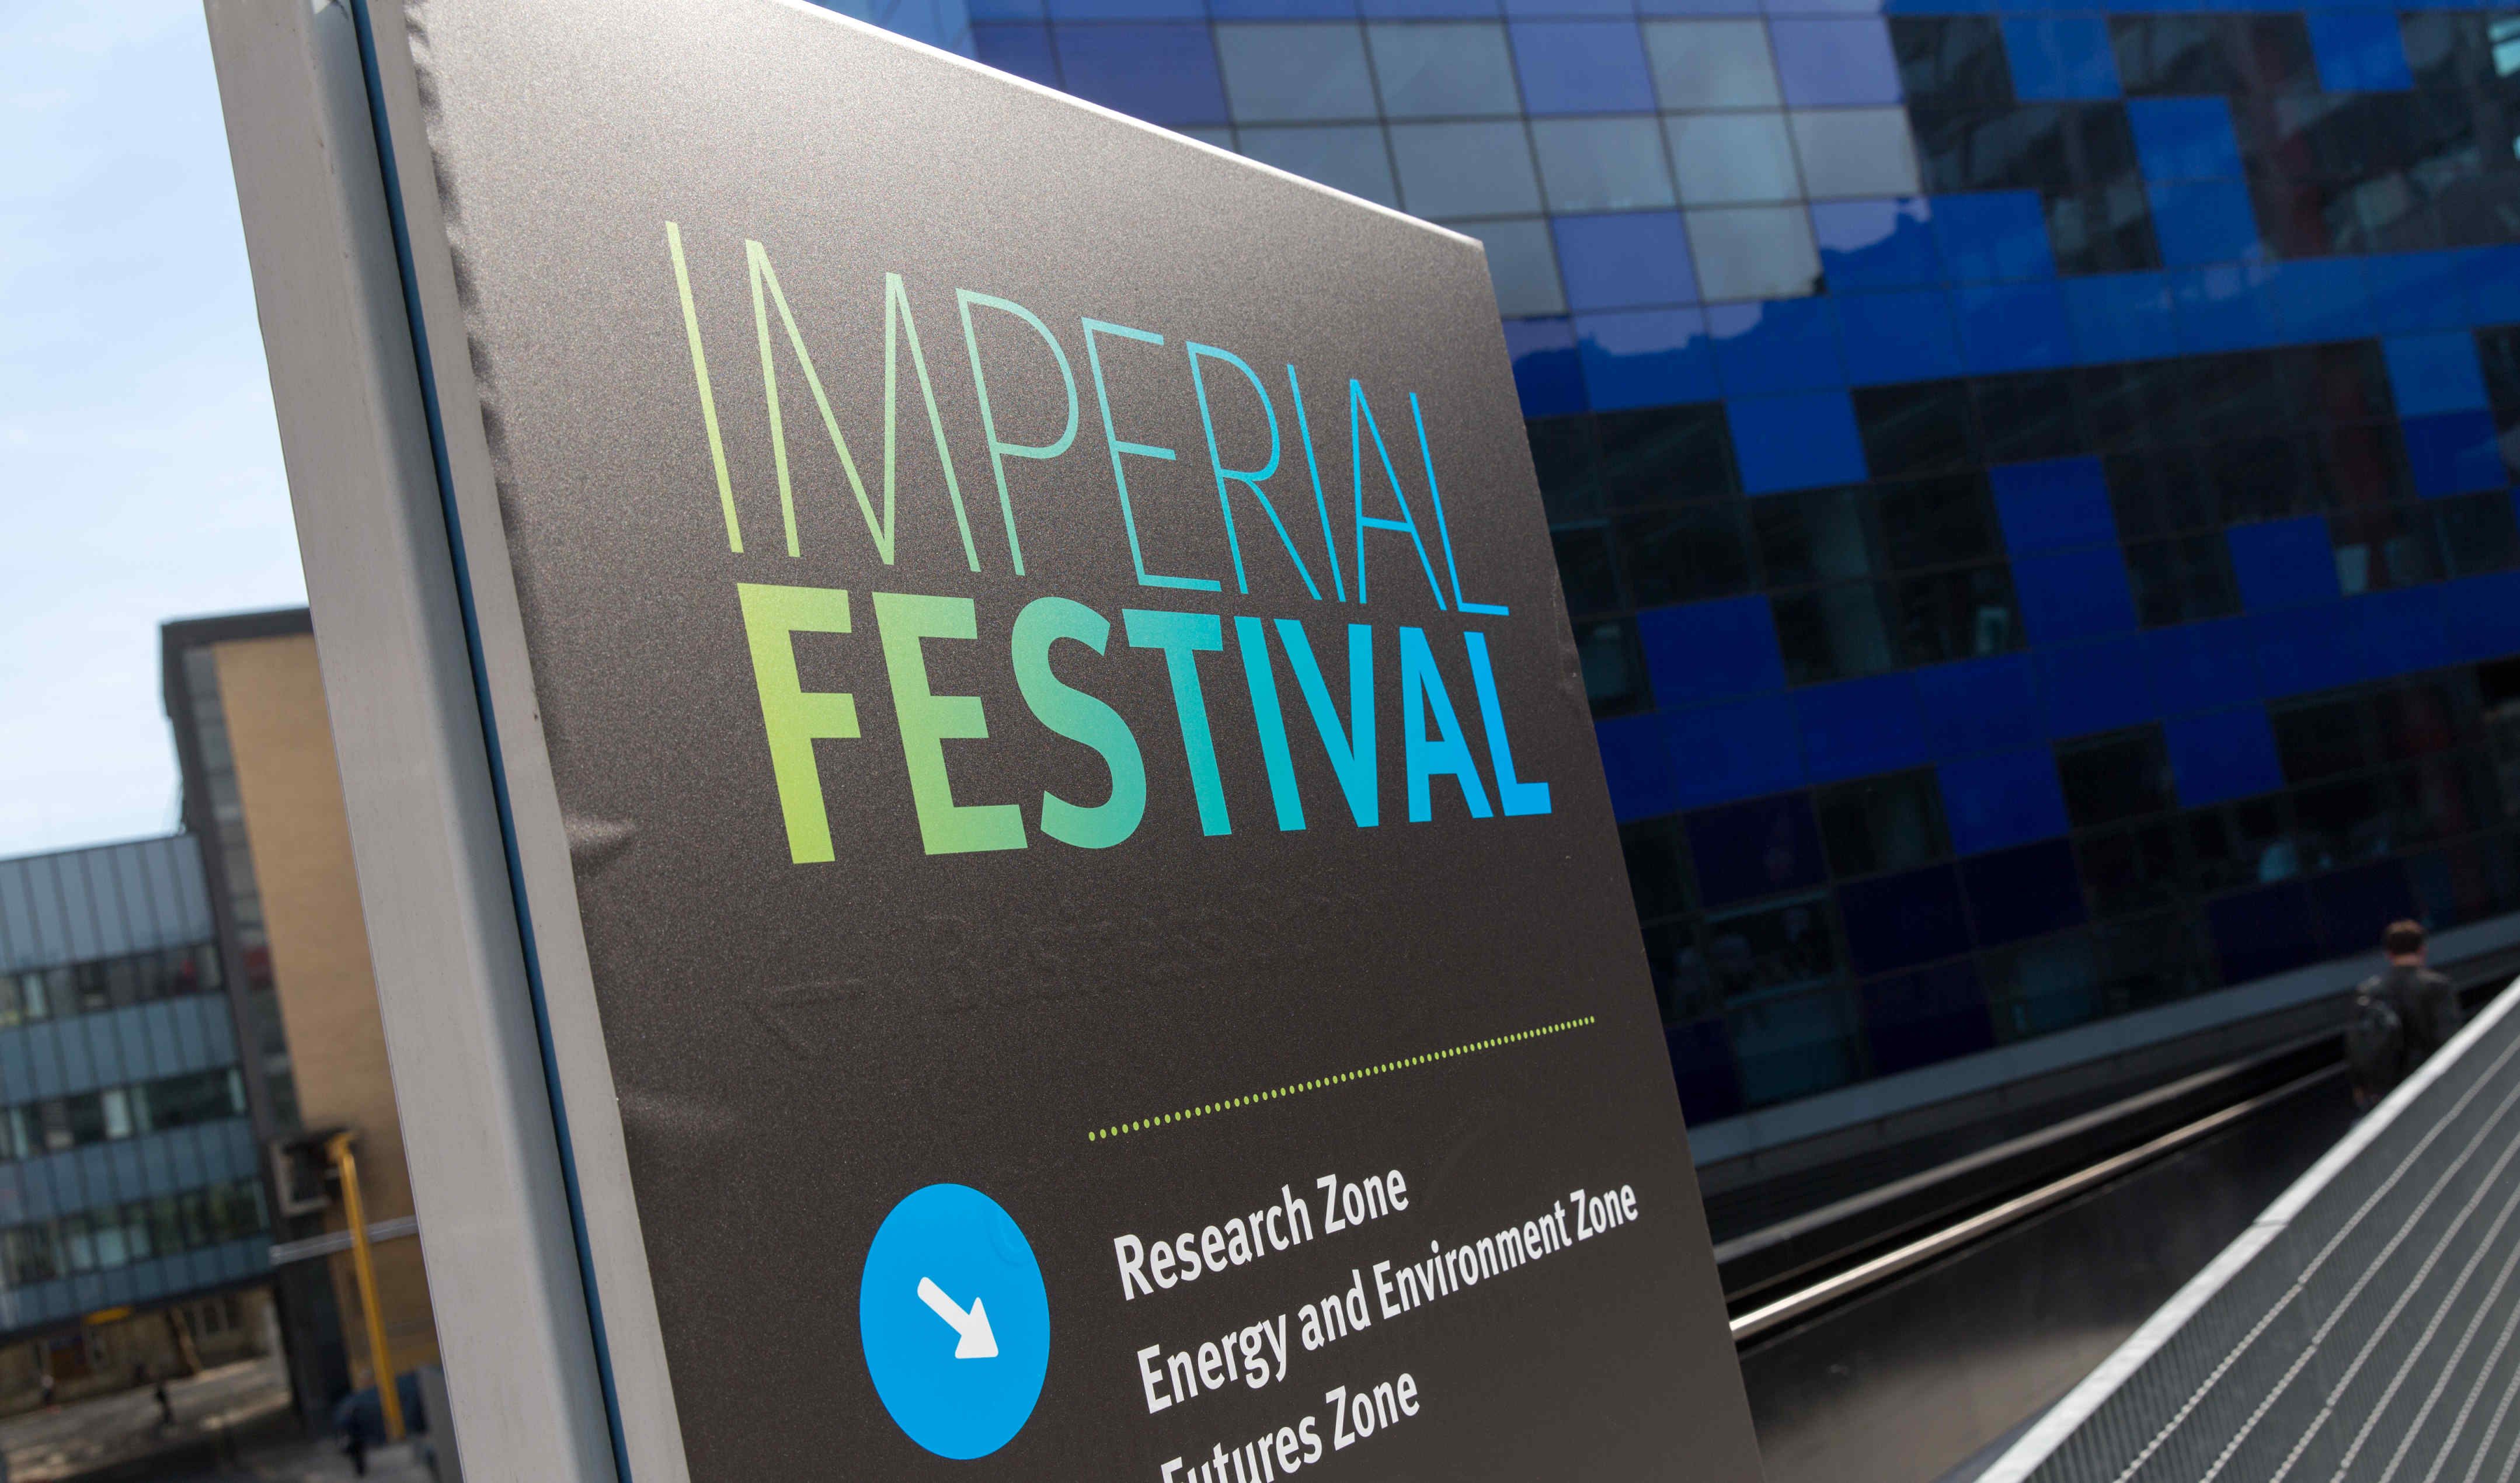 Imperial Festival 2016